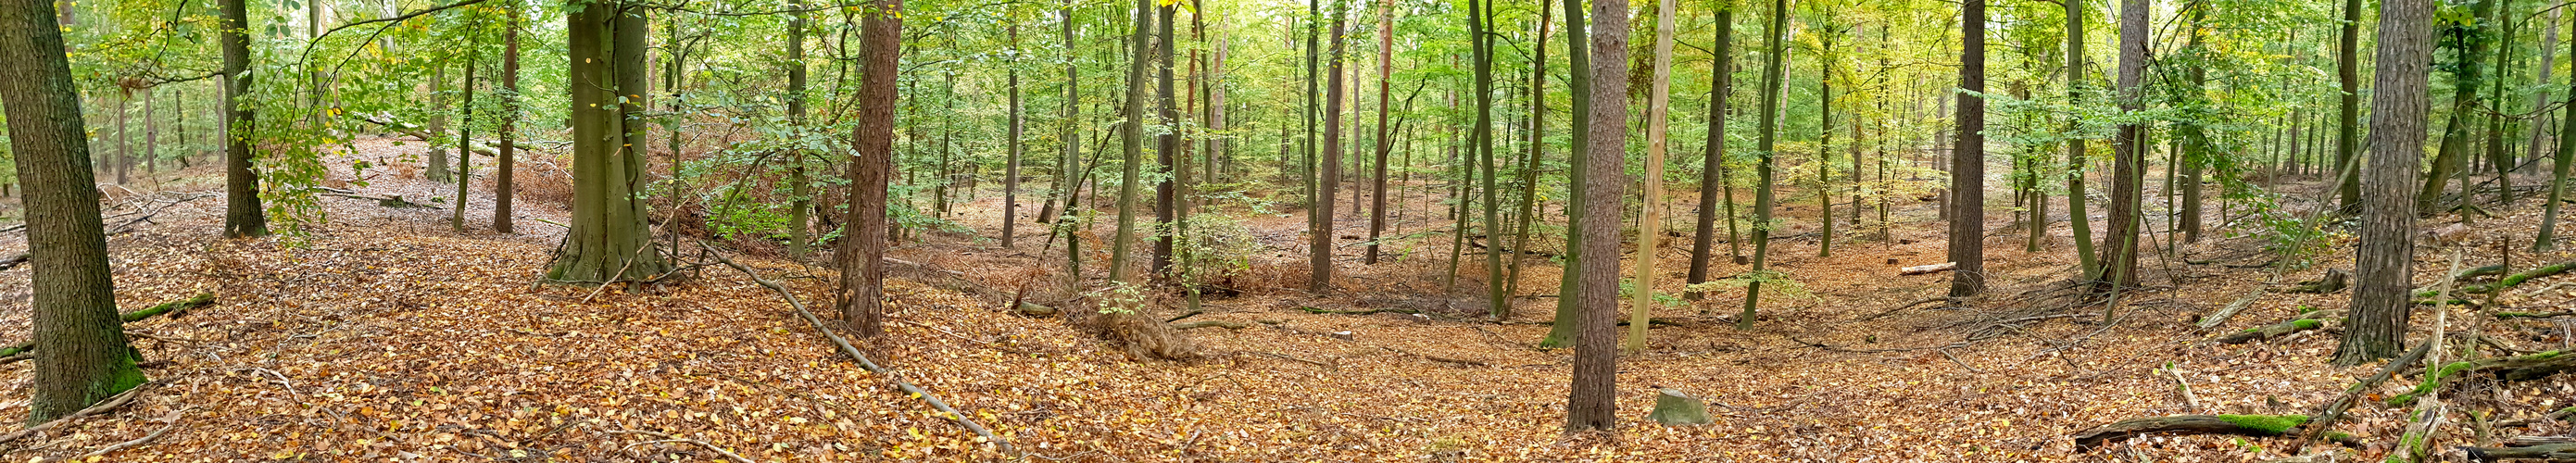 Der Tegeler Forst im Herbstkleid